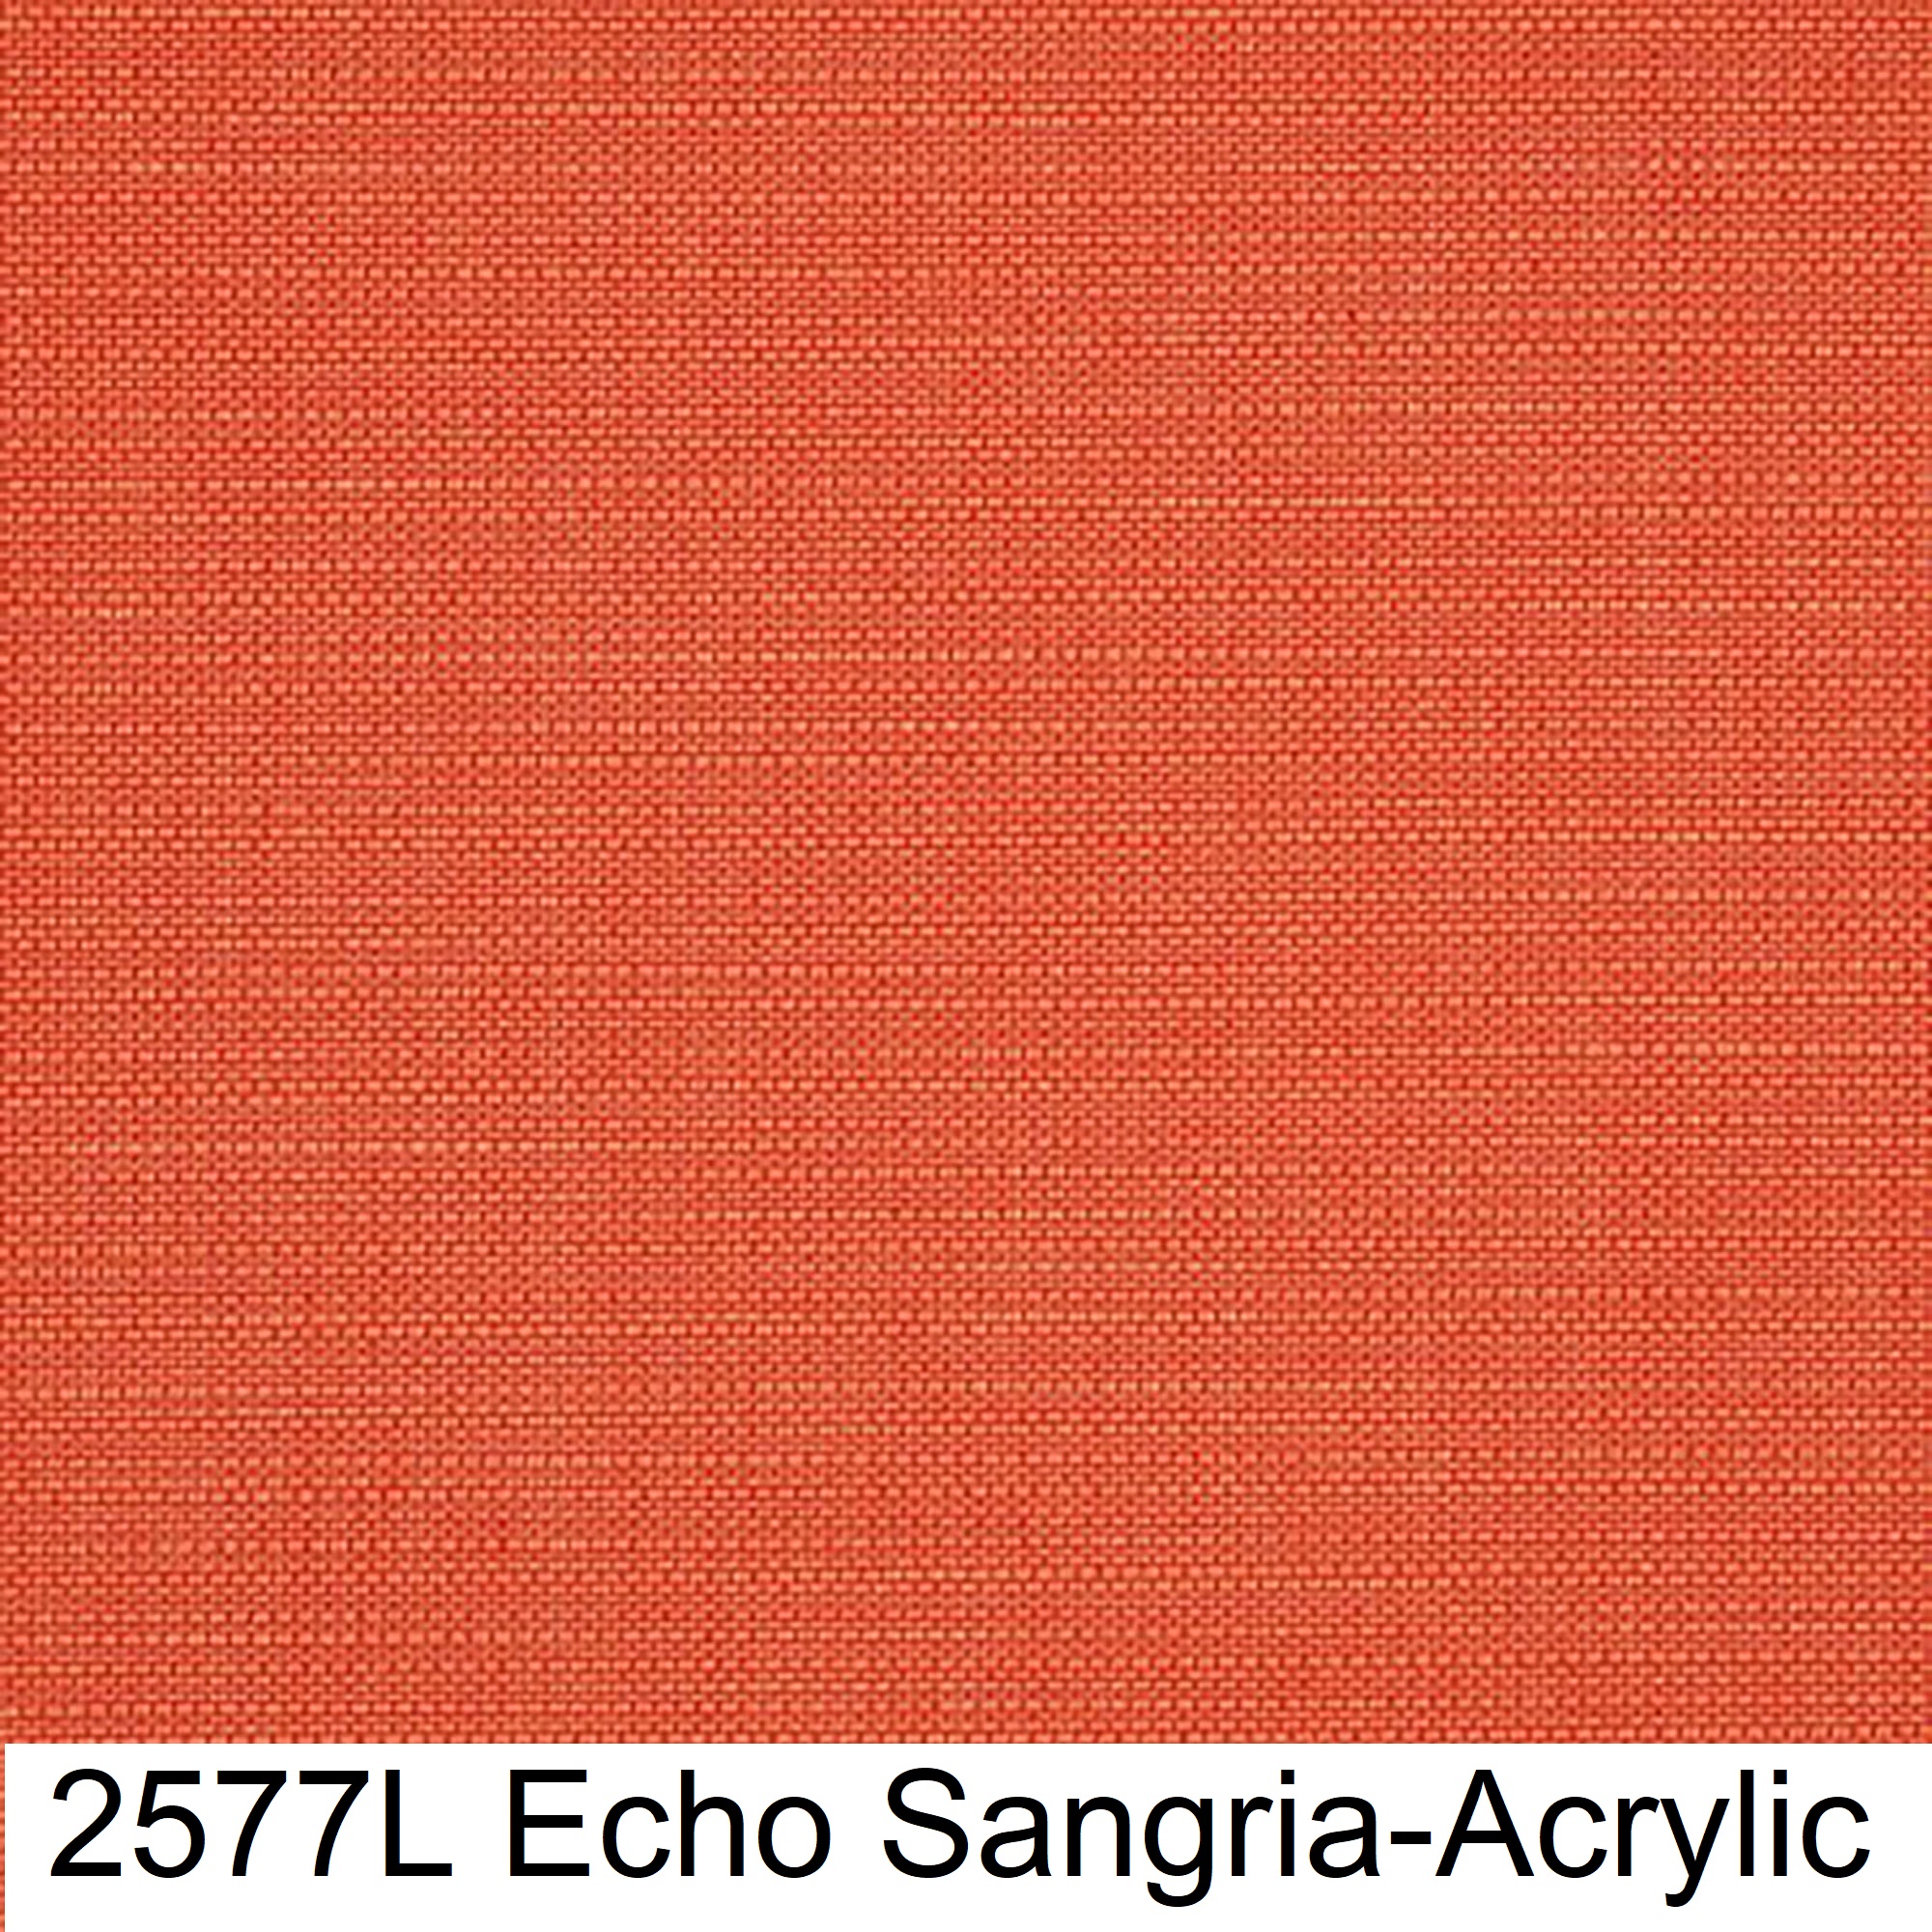 2577L Echo Sangria-Acrylic